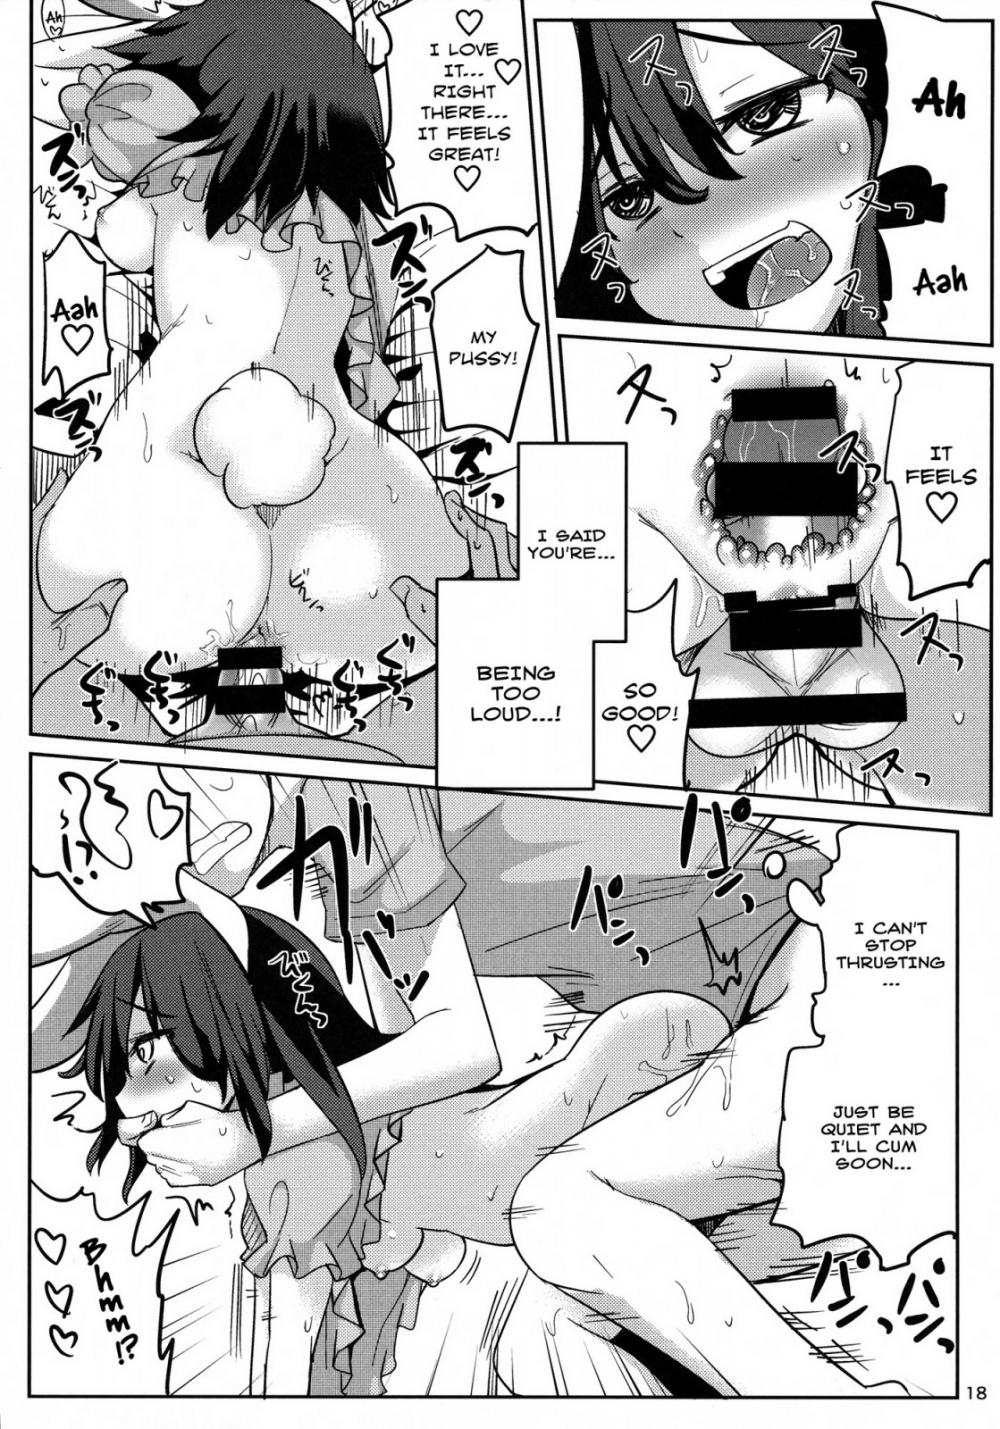 Hentai Manga Comic-Tewi-chan having an Affair-Read-17